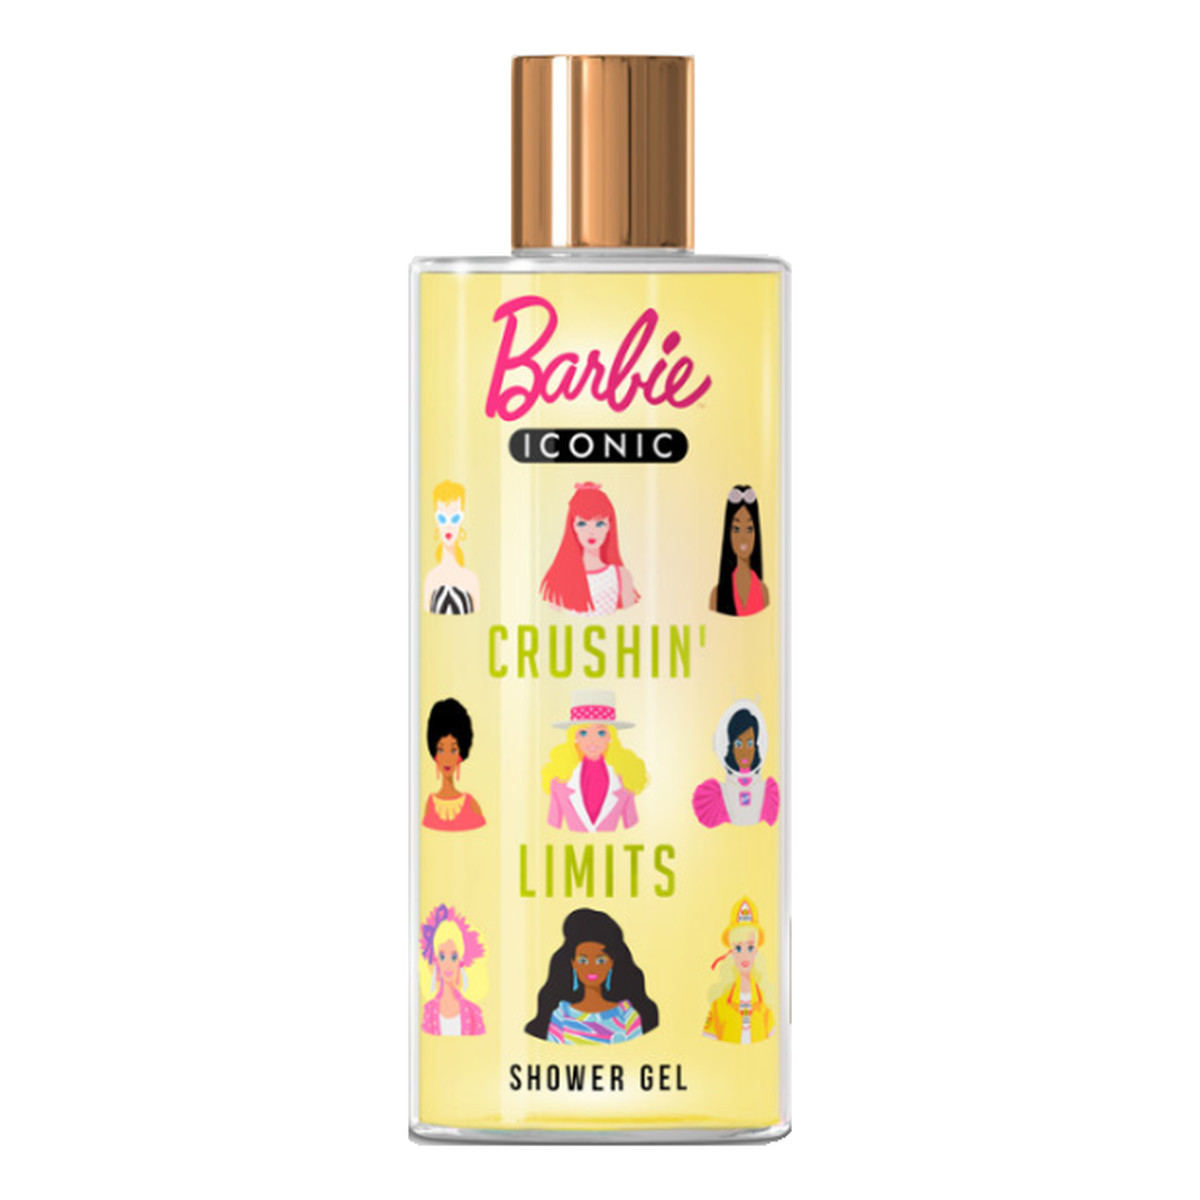 Bi-es Barbie Iconic Żel pod prysznic Crushin' Limits 300ml